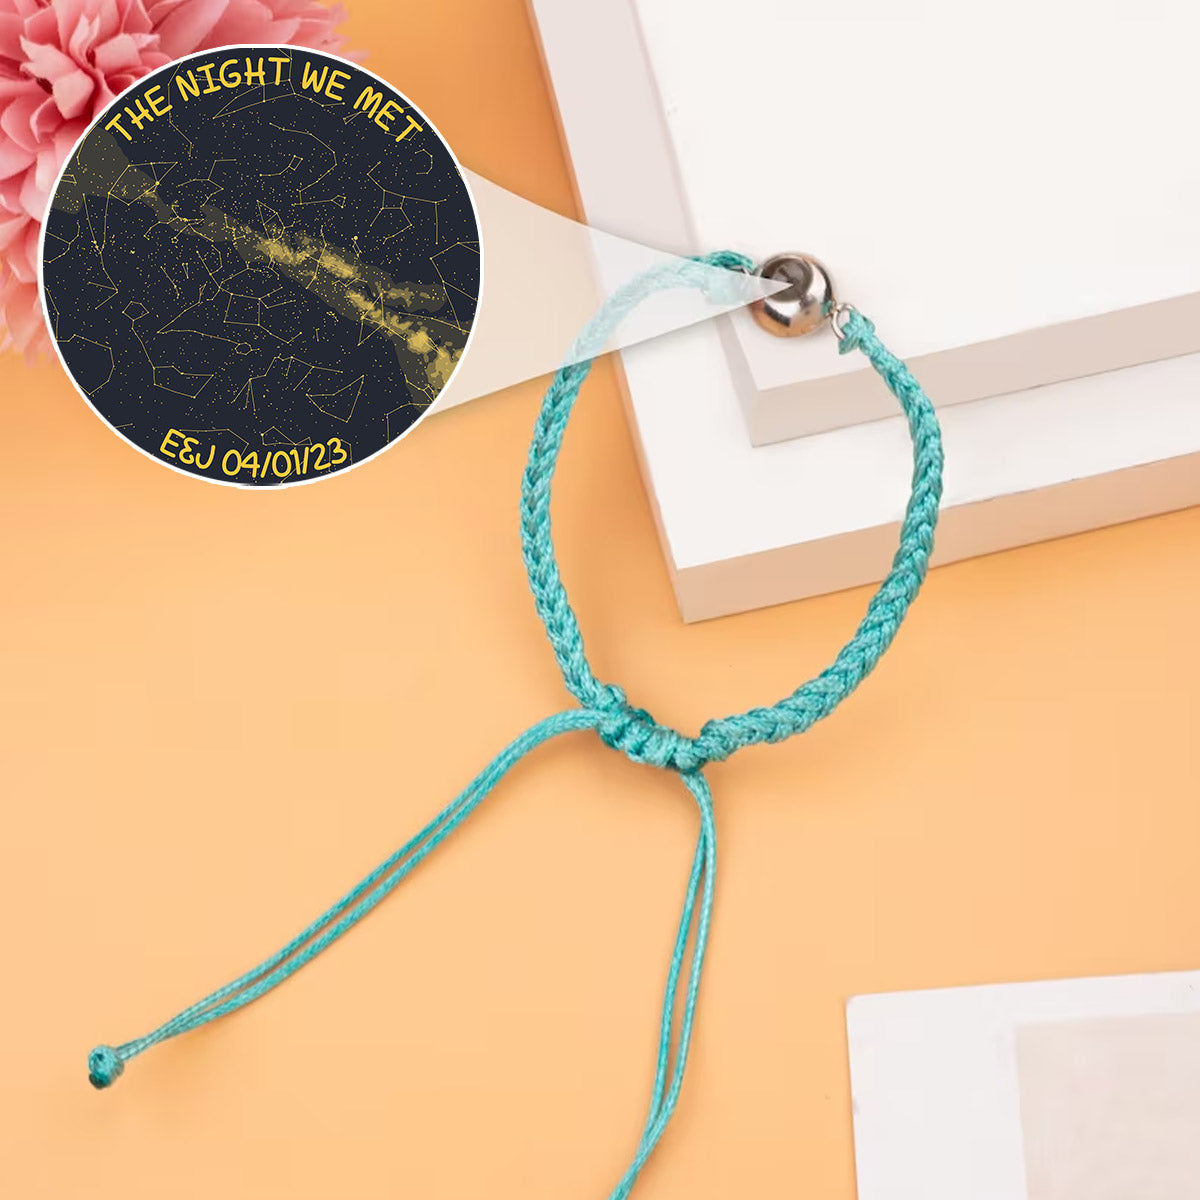 The Night We Met Custom Star Map - gift for boyfriend, husband, wife, girlfriend - Personalized Projection Bracelet